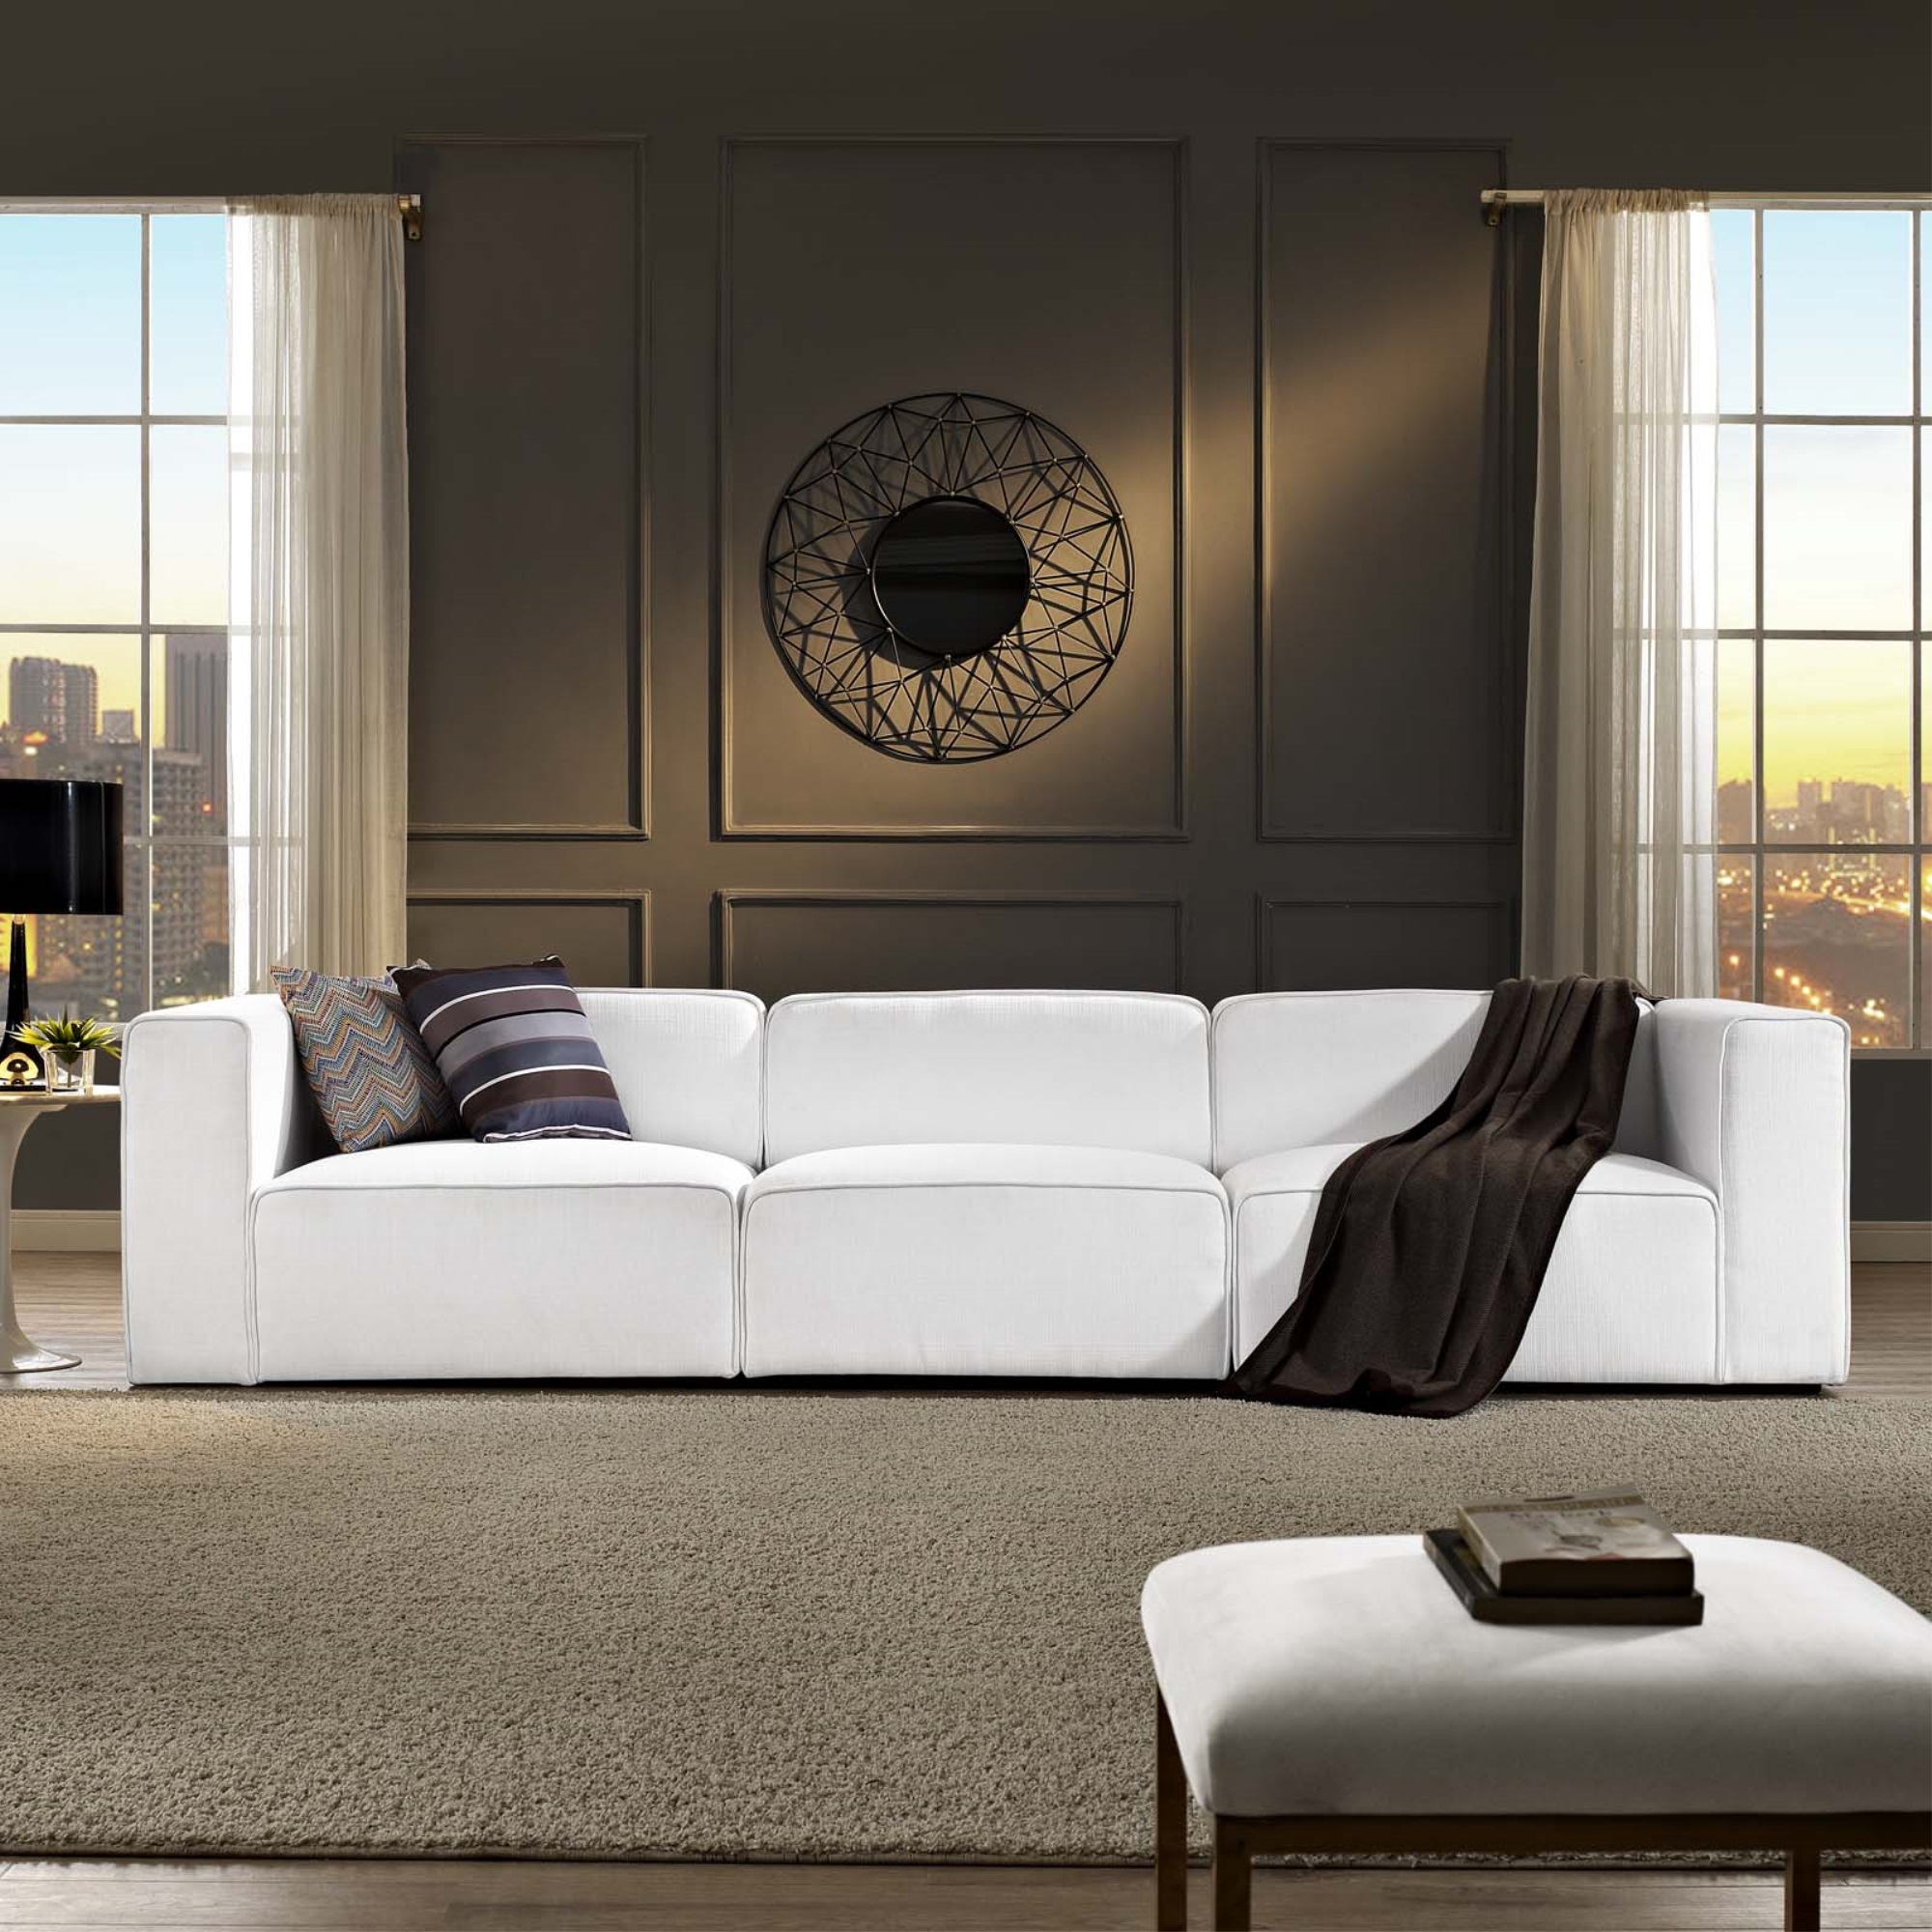 Ergode Mingle 3 Piece Upholstered Fabric Sectional Sofa Set - White